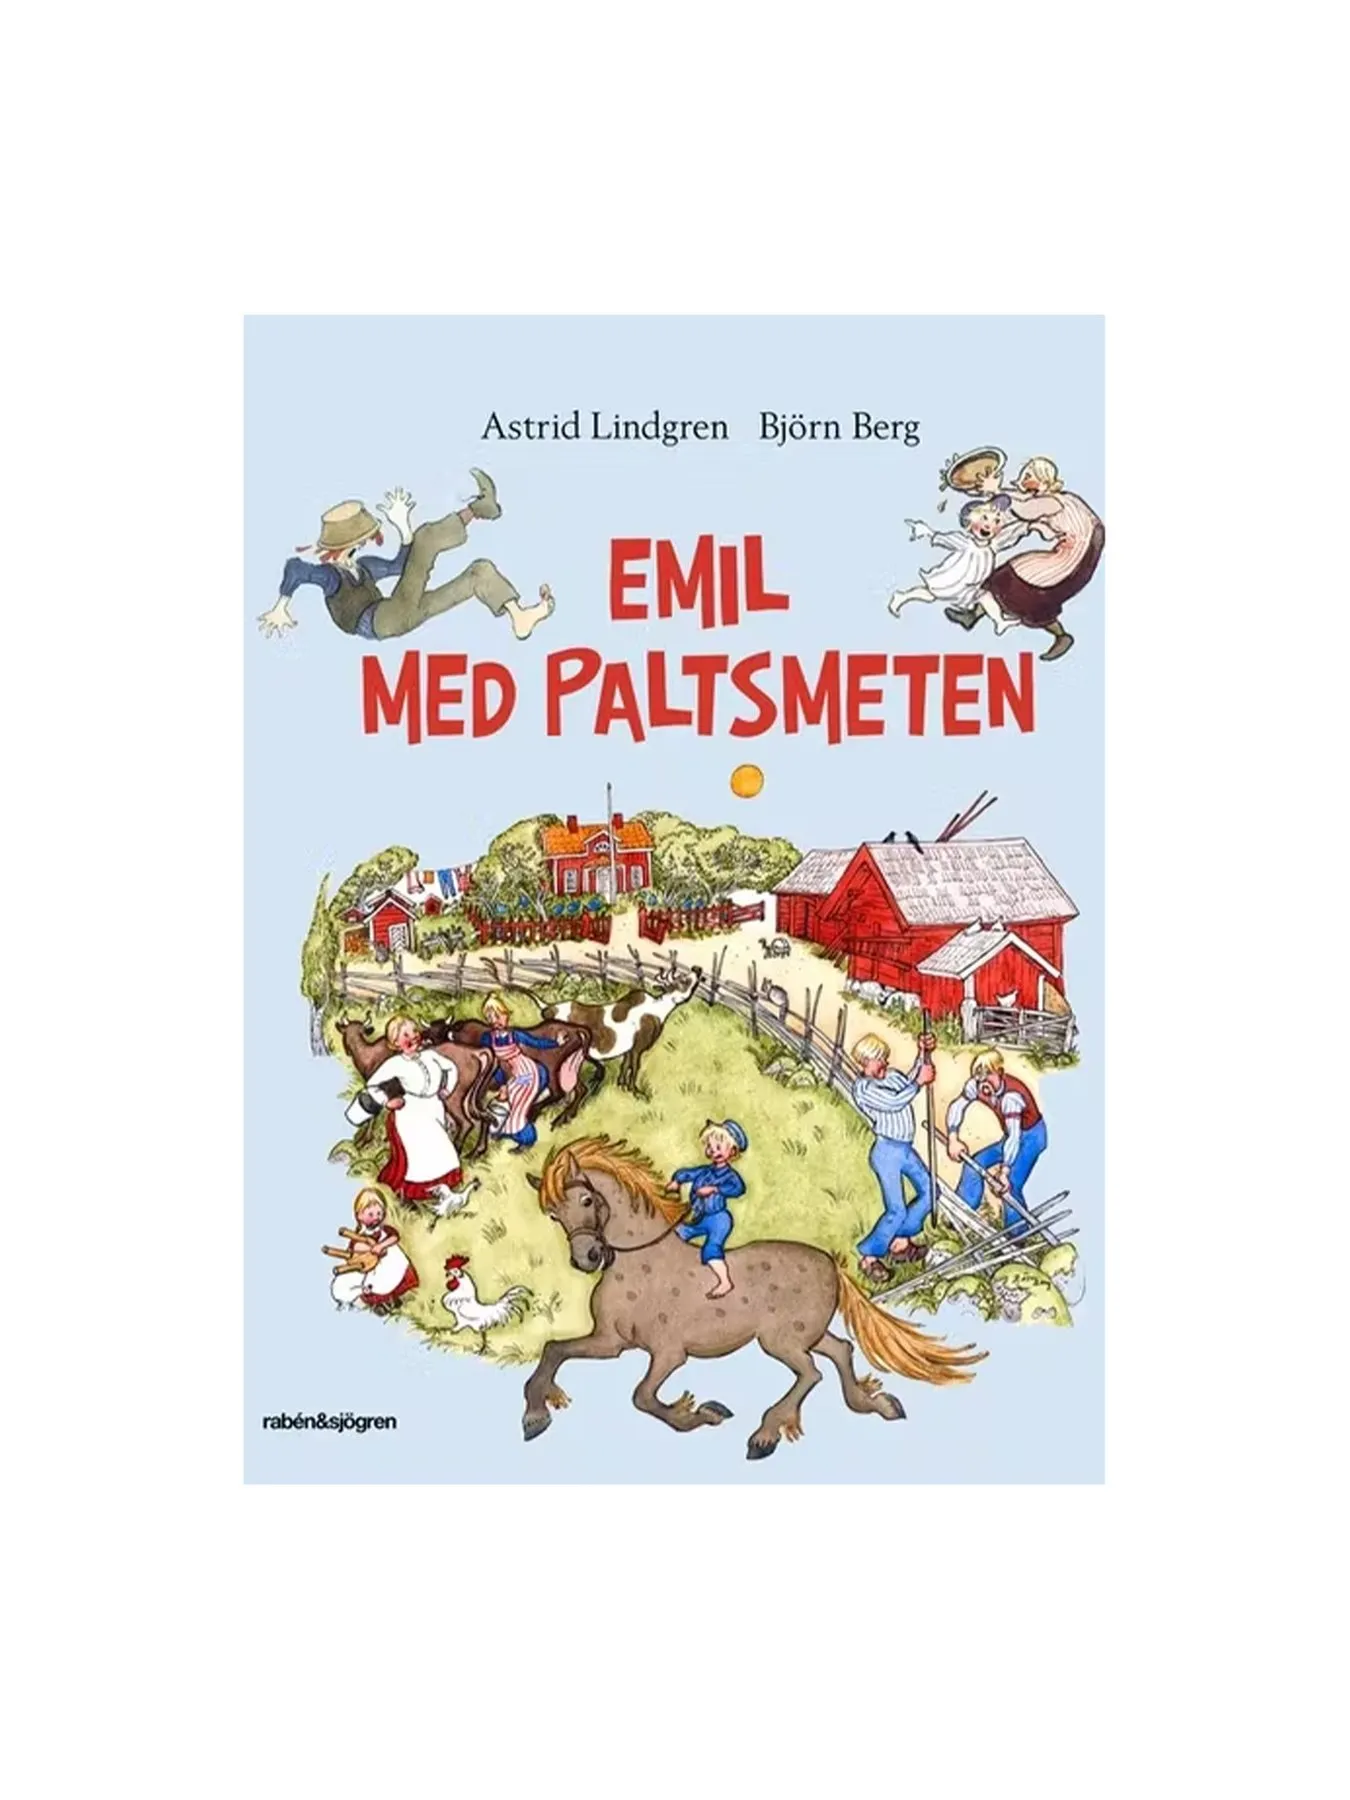 Emil med paltsmeten (Swedish)